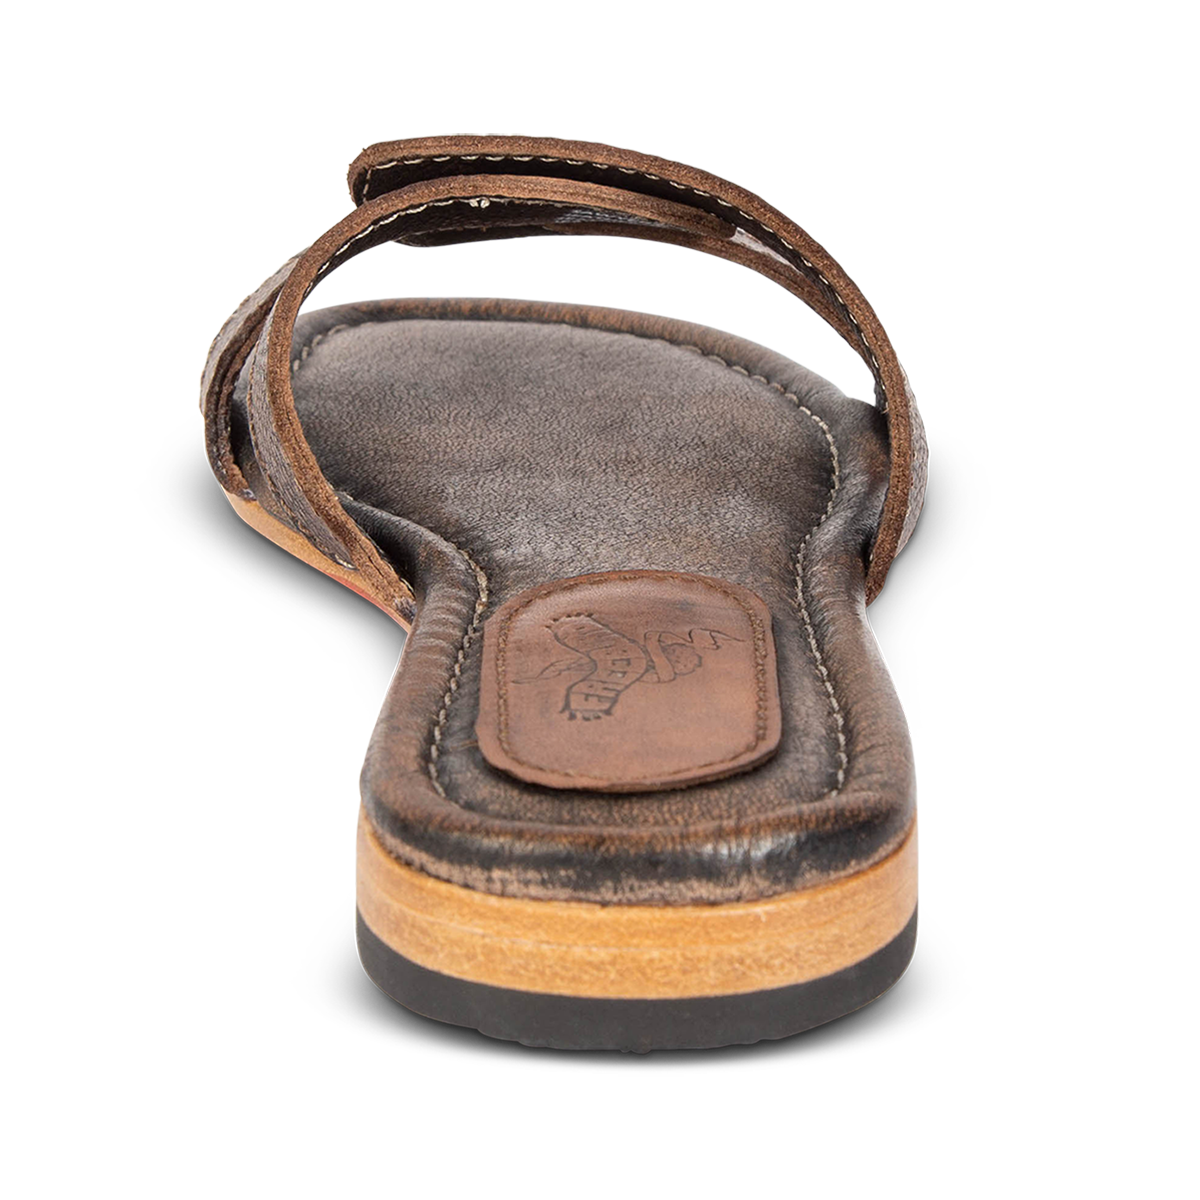 Back view showing low heel on FREEBIRD women's Sawyer black criss-cross leather strap sandal